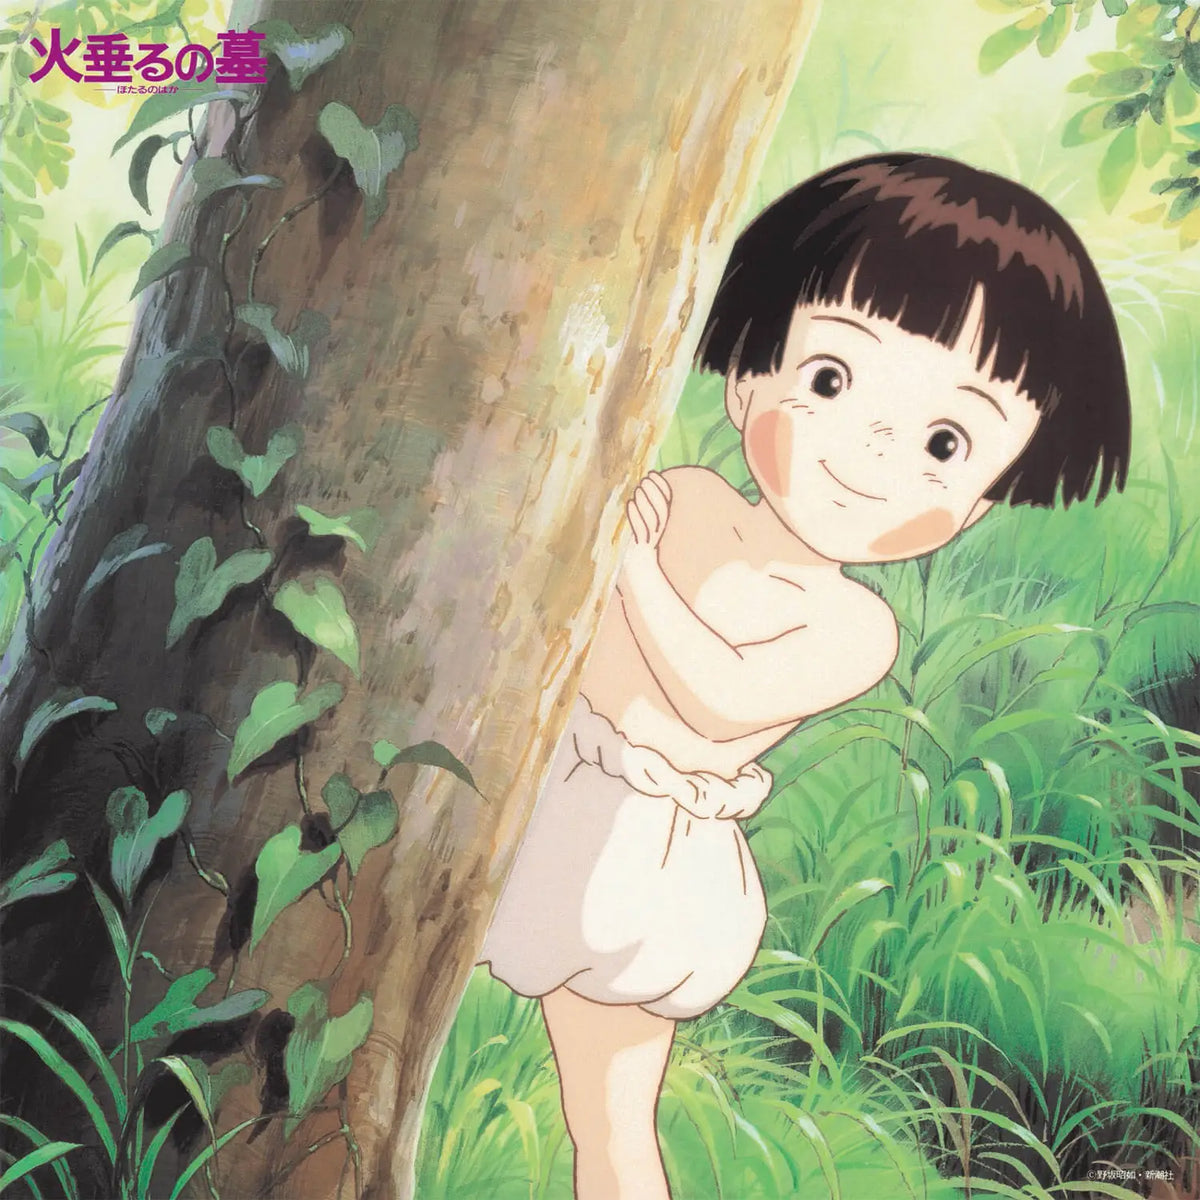 L'Art du Voyage de Chihiro - Studio Ghibli